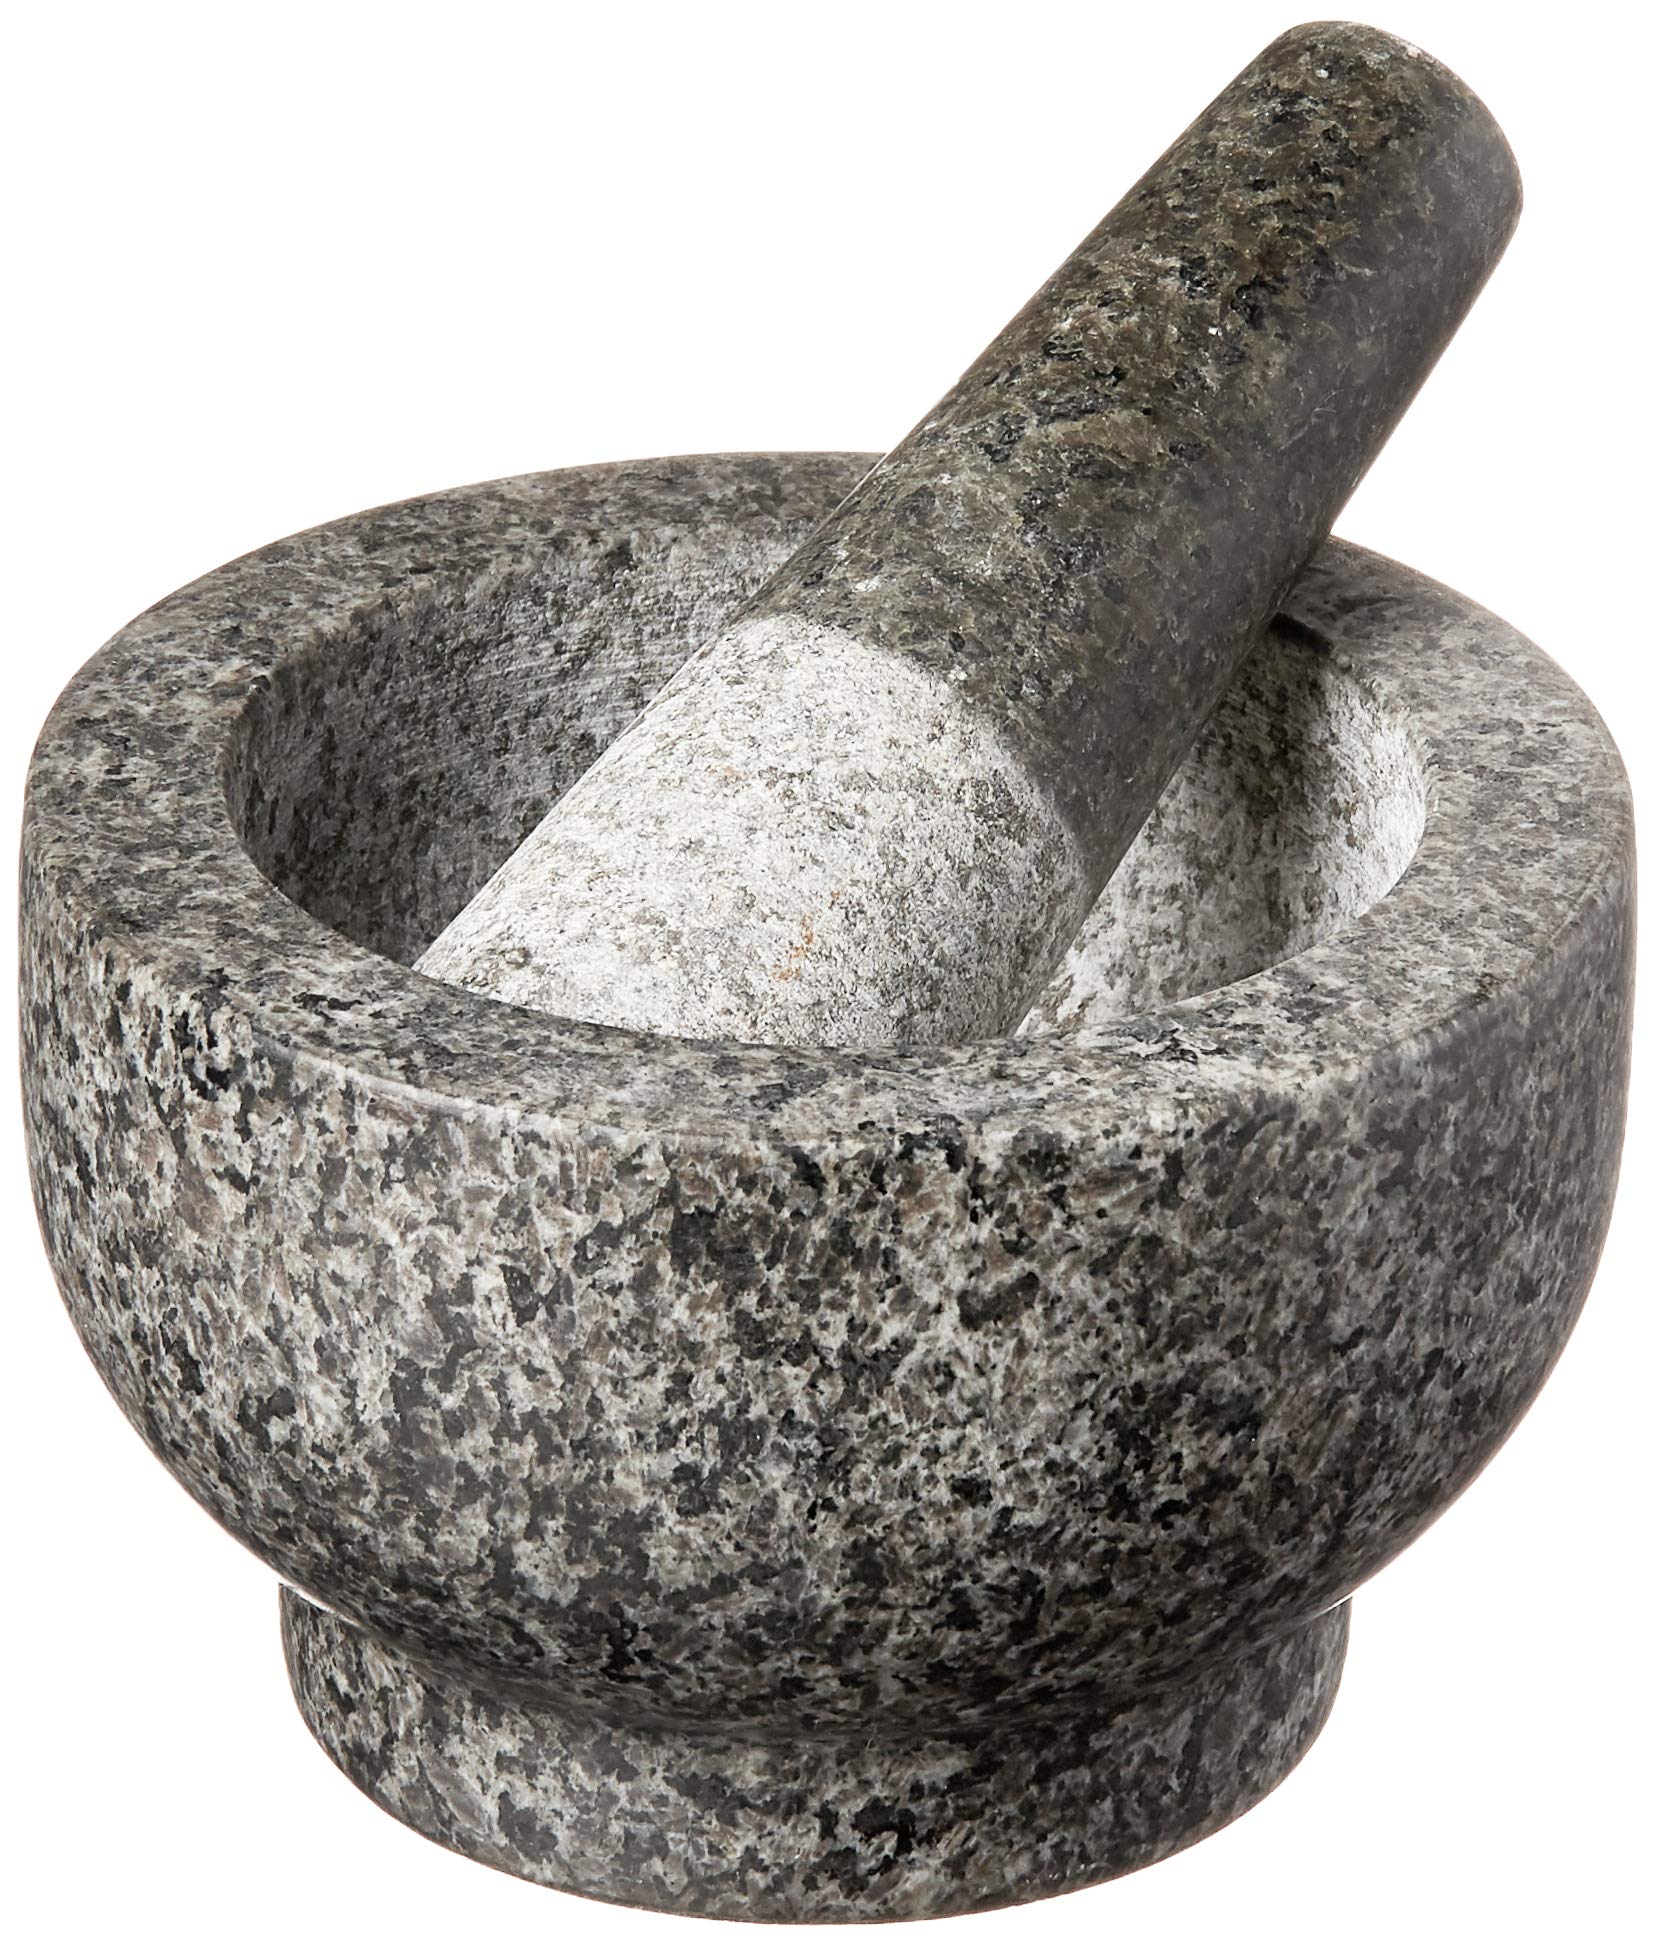 Cole & Mason Granite Mortar & Pestle, 4-Pound, Gray Free Shipping w. Prime or on orders $25+ $11.99